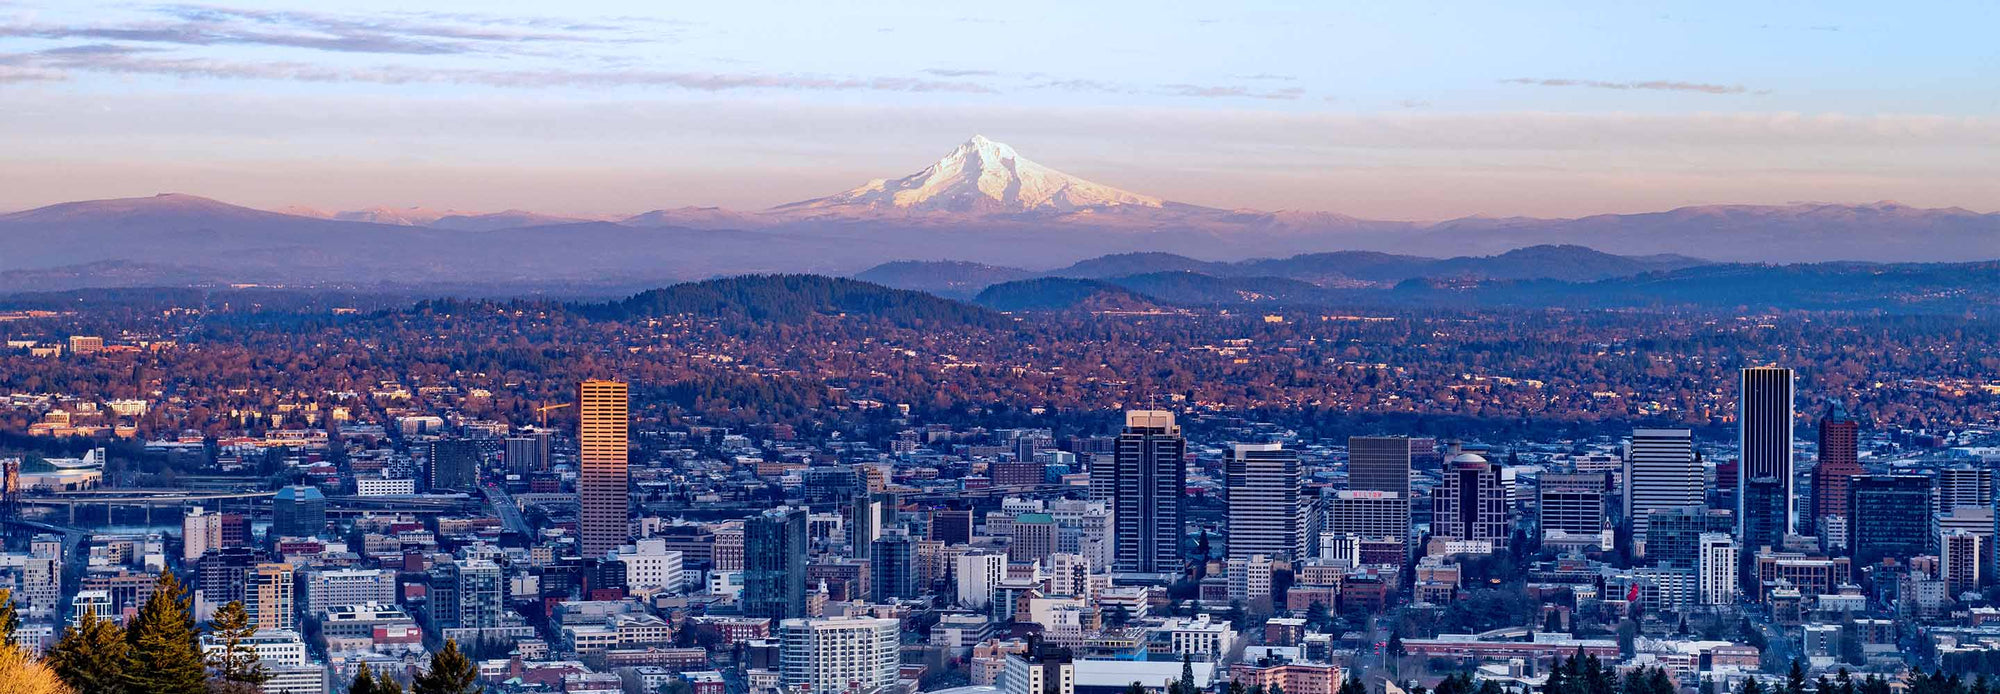 Portland city skyline